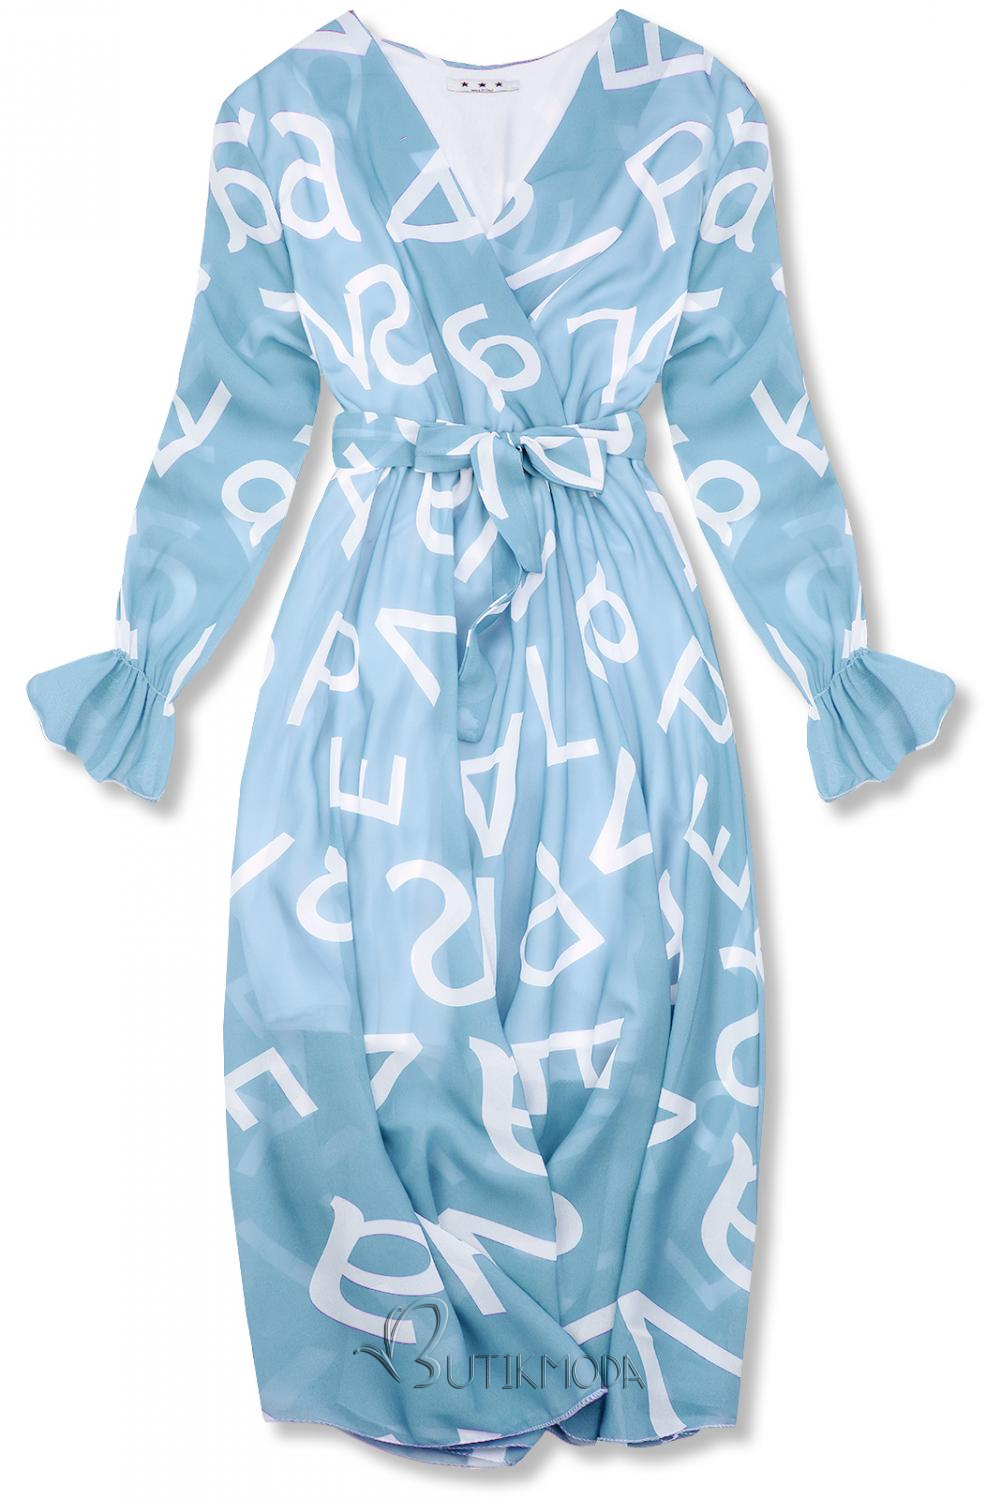 Blue midi dress with alphabet pattern